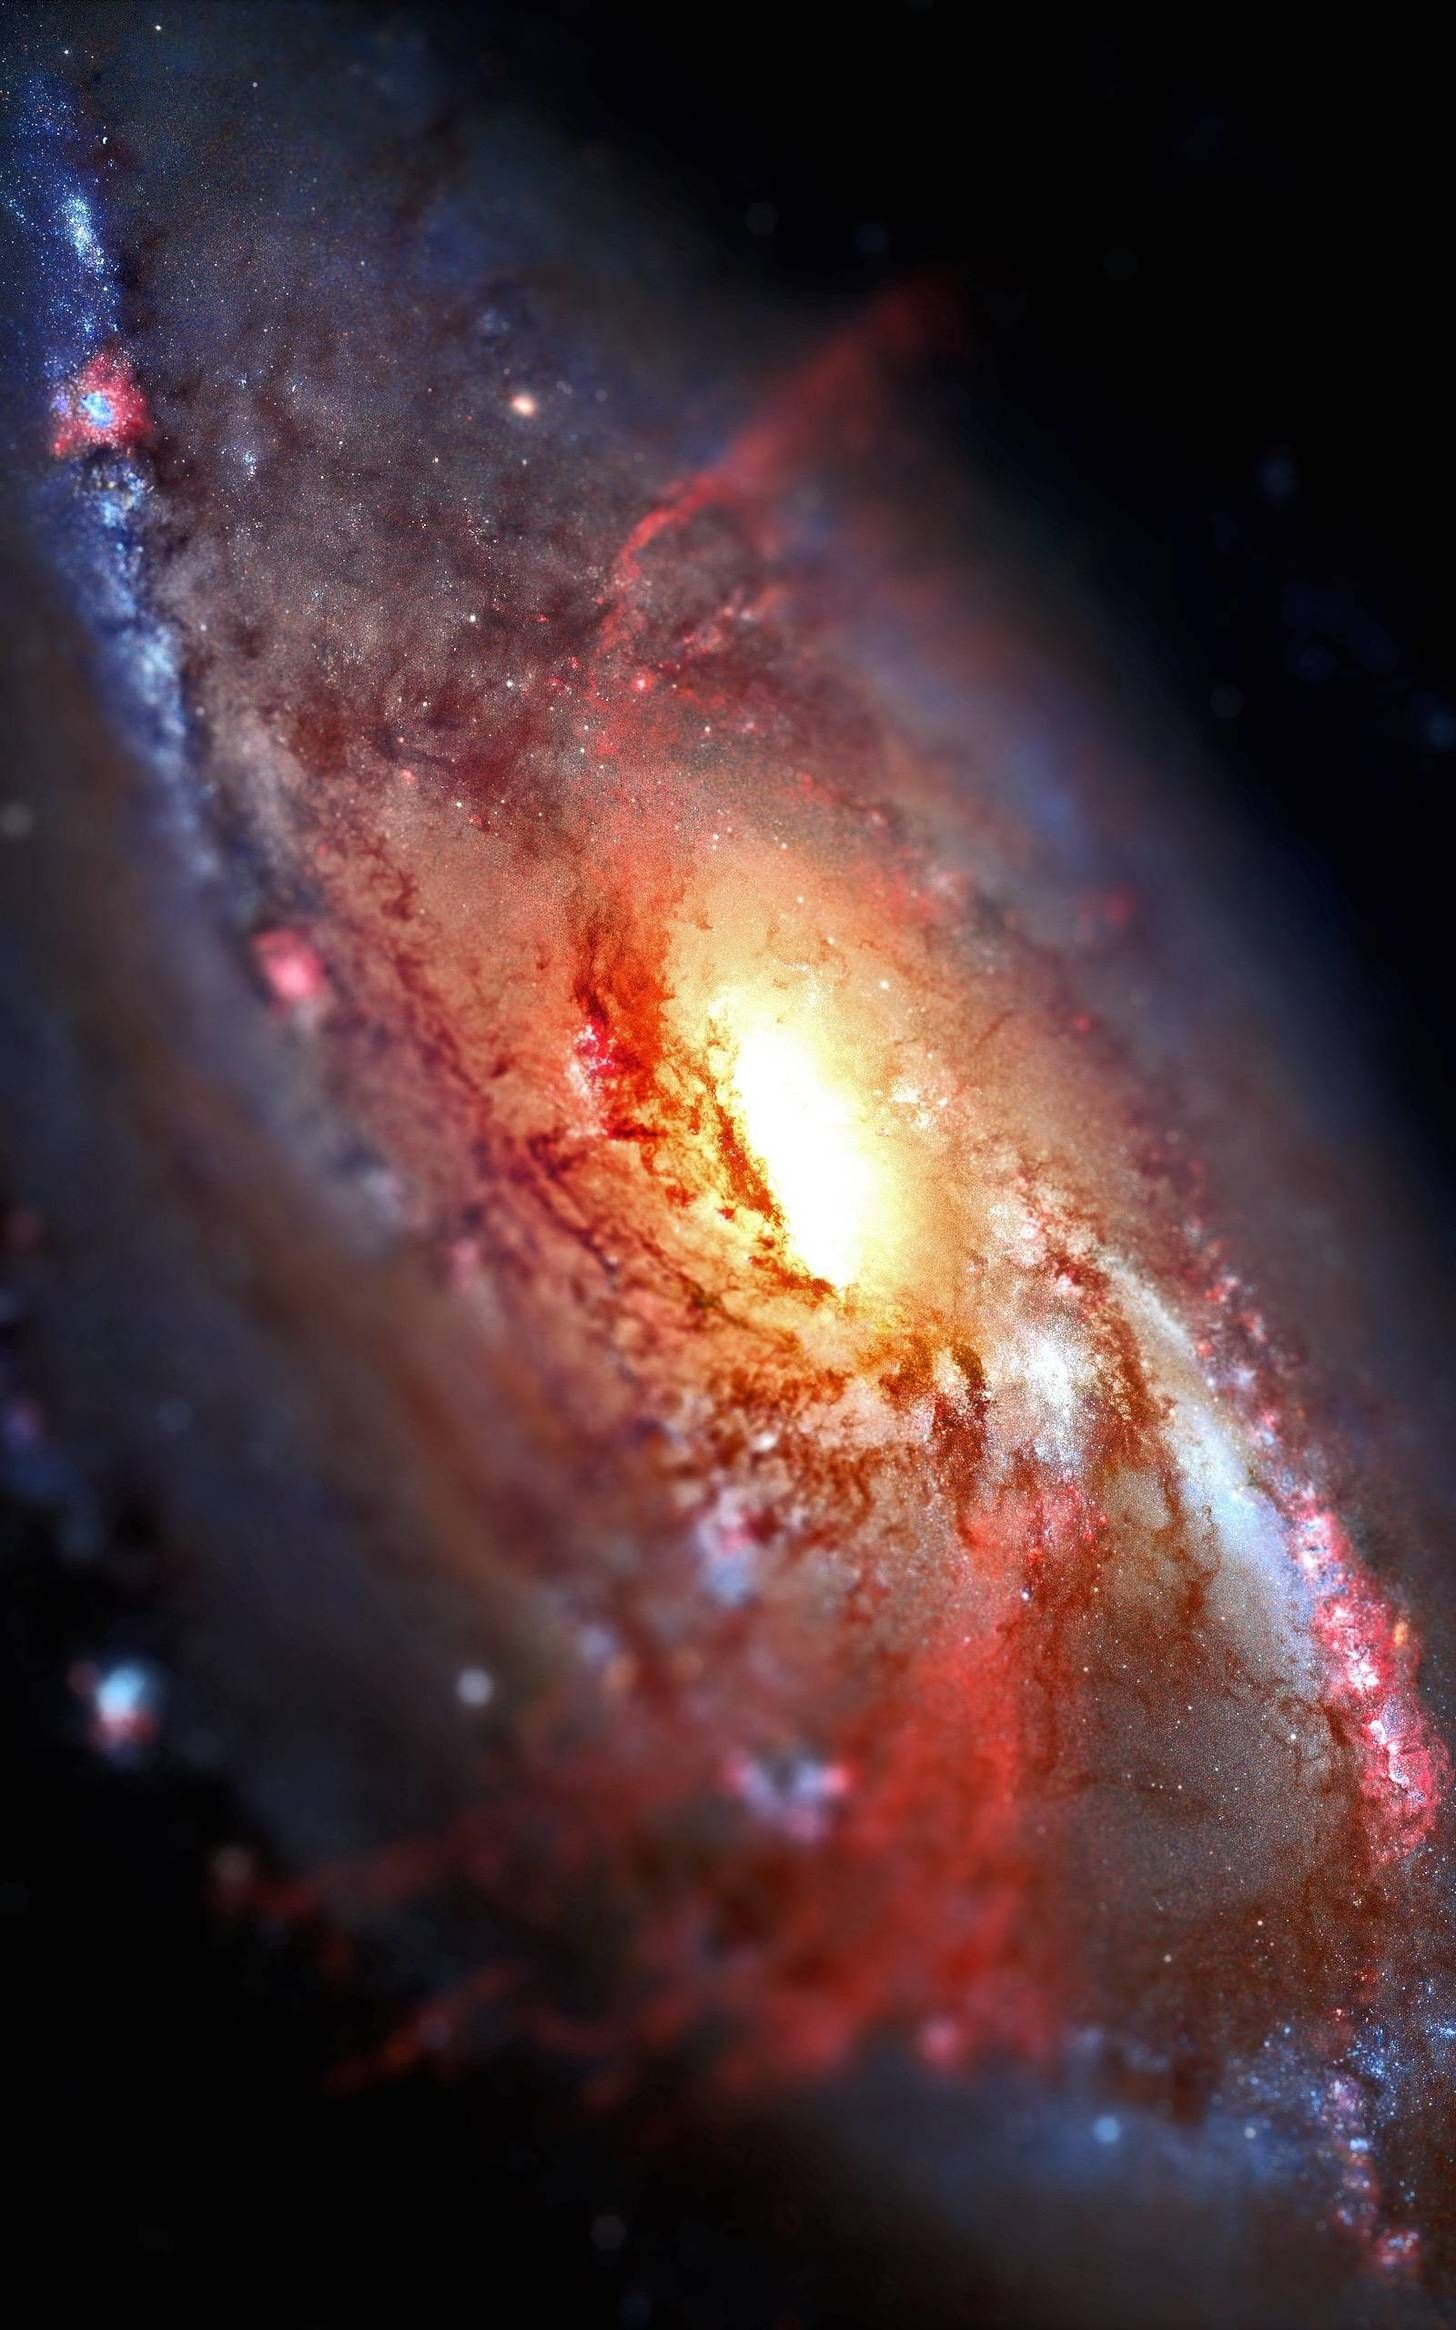 Jumbo Space Album | Созвездия | Космос, Астрономия И Галактики for Space Related Pictures